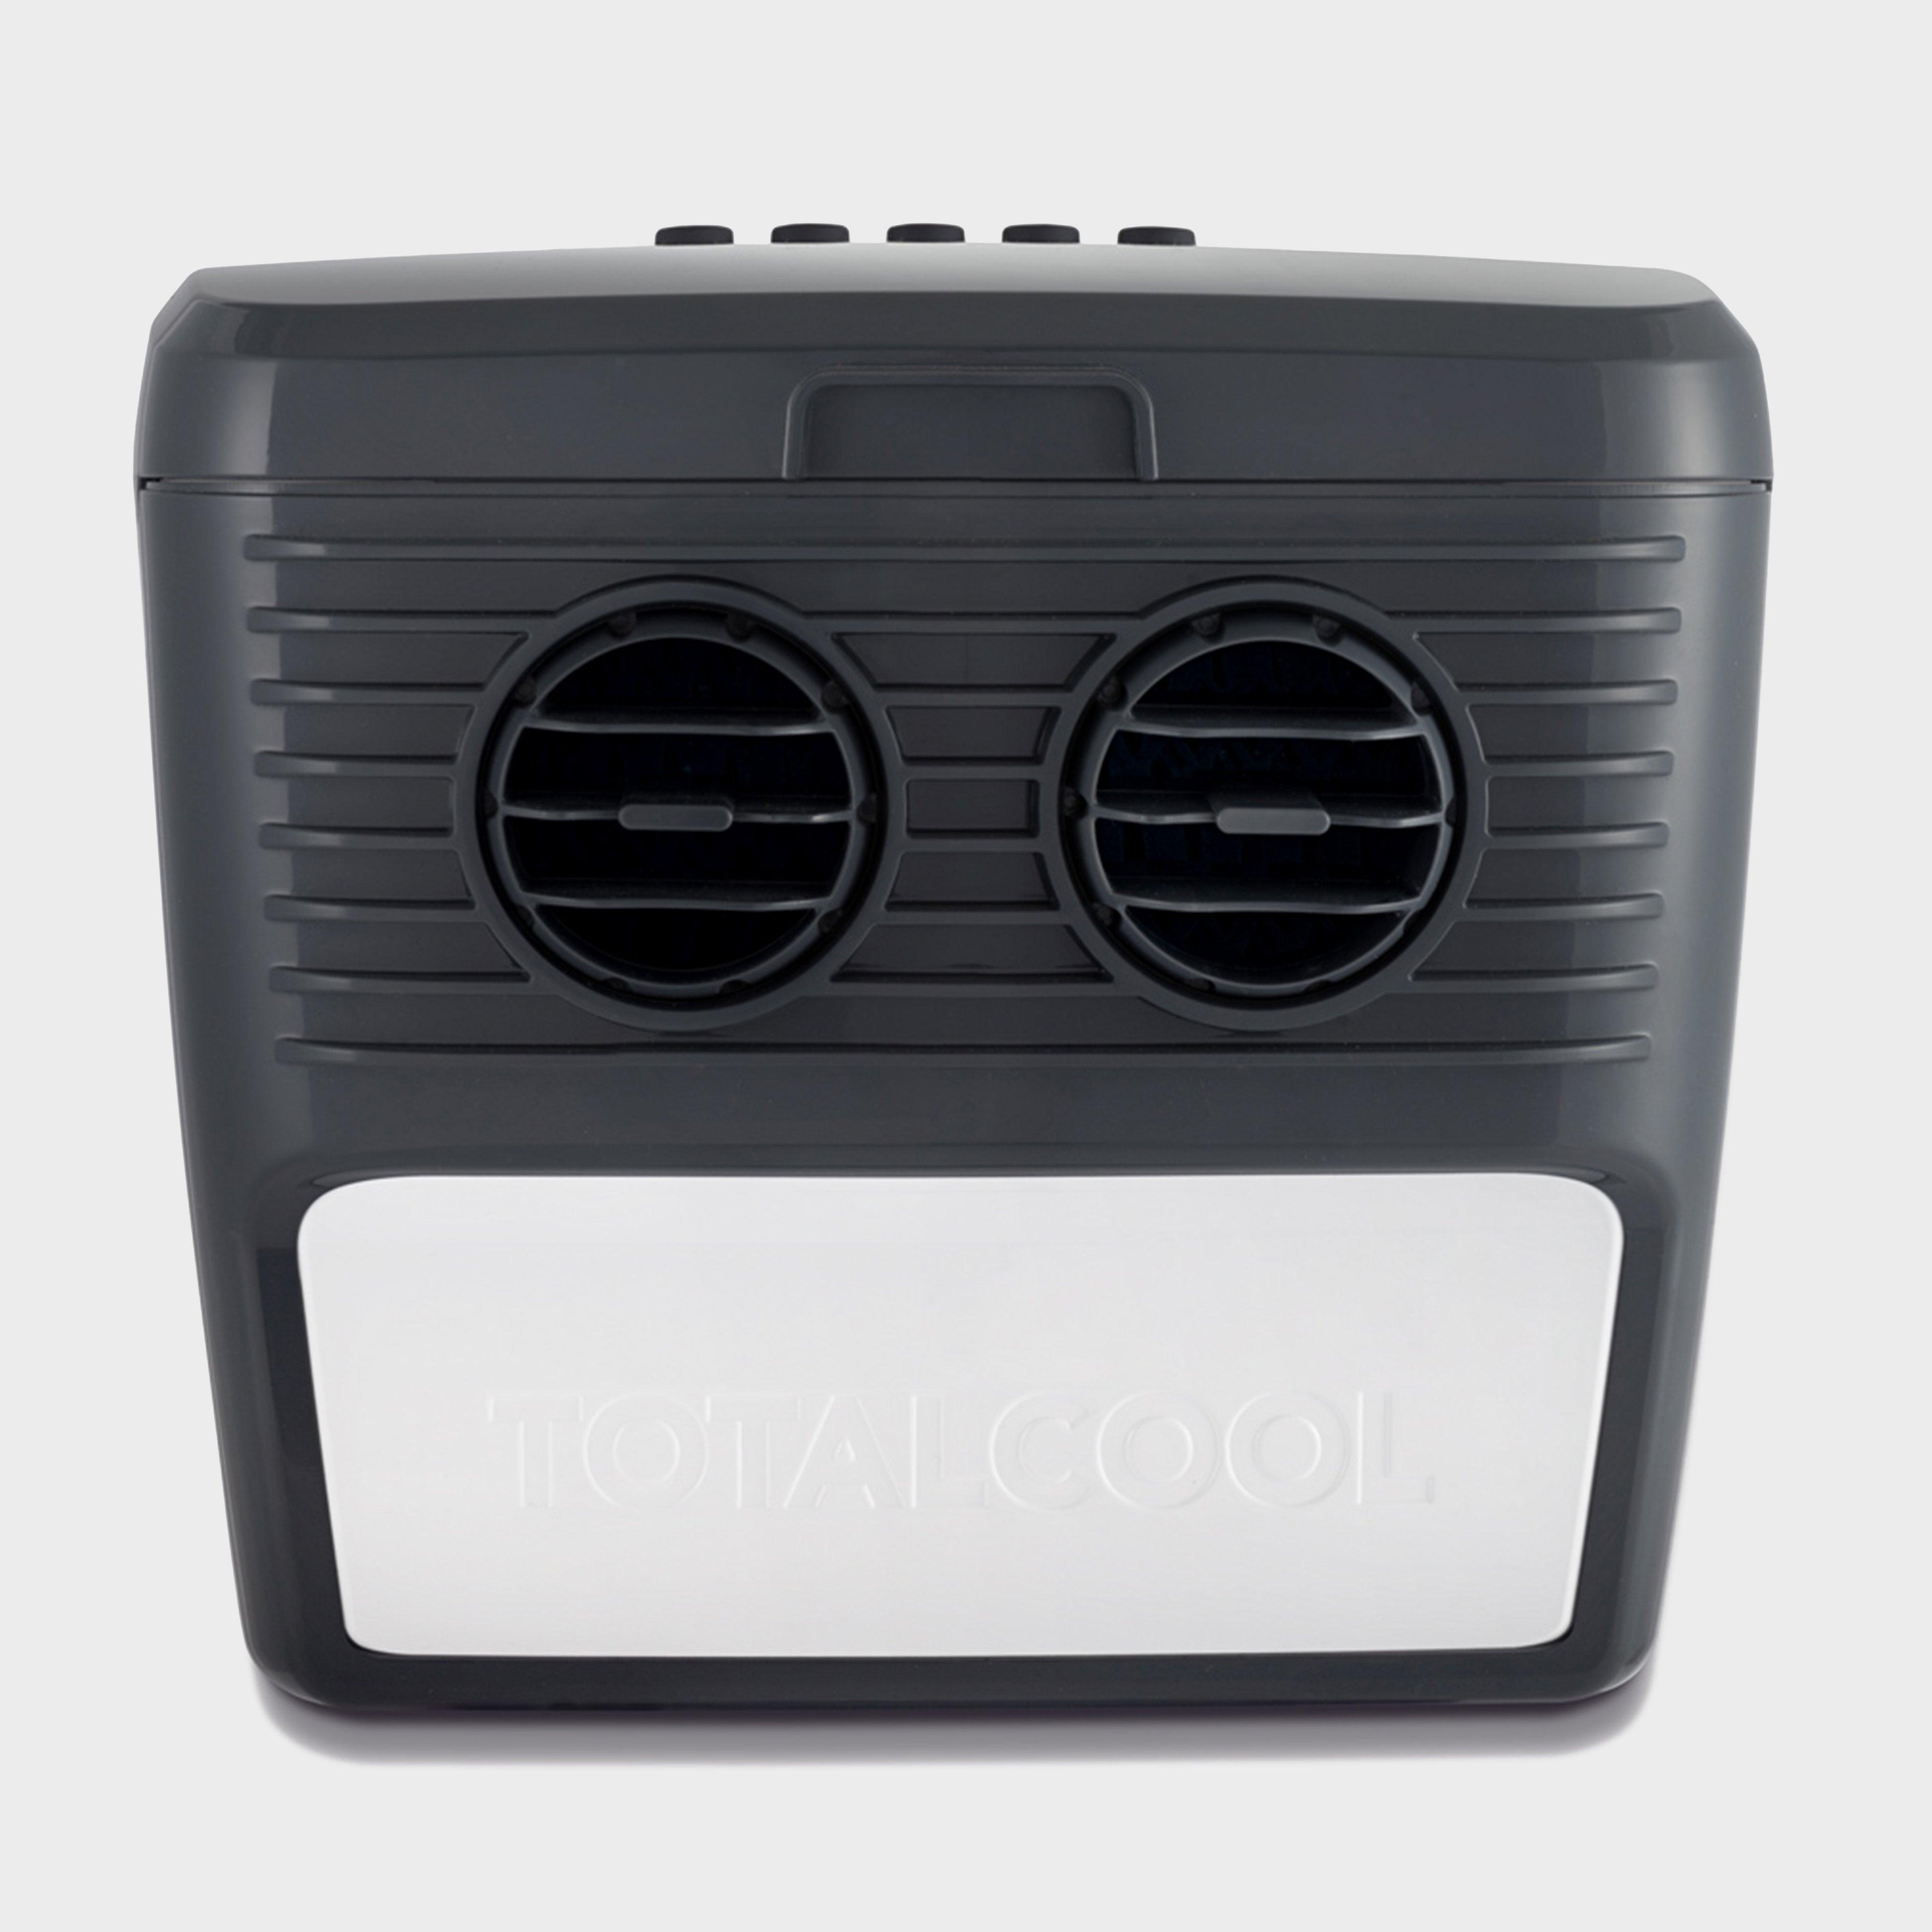 Totalcool 3000 Portable Evaporative Air Cooler Review